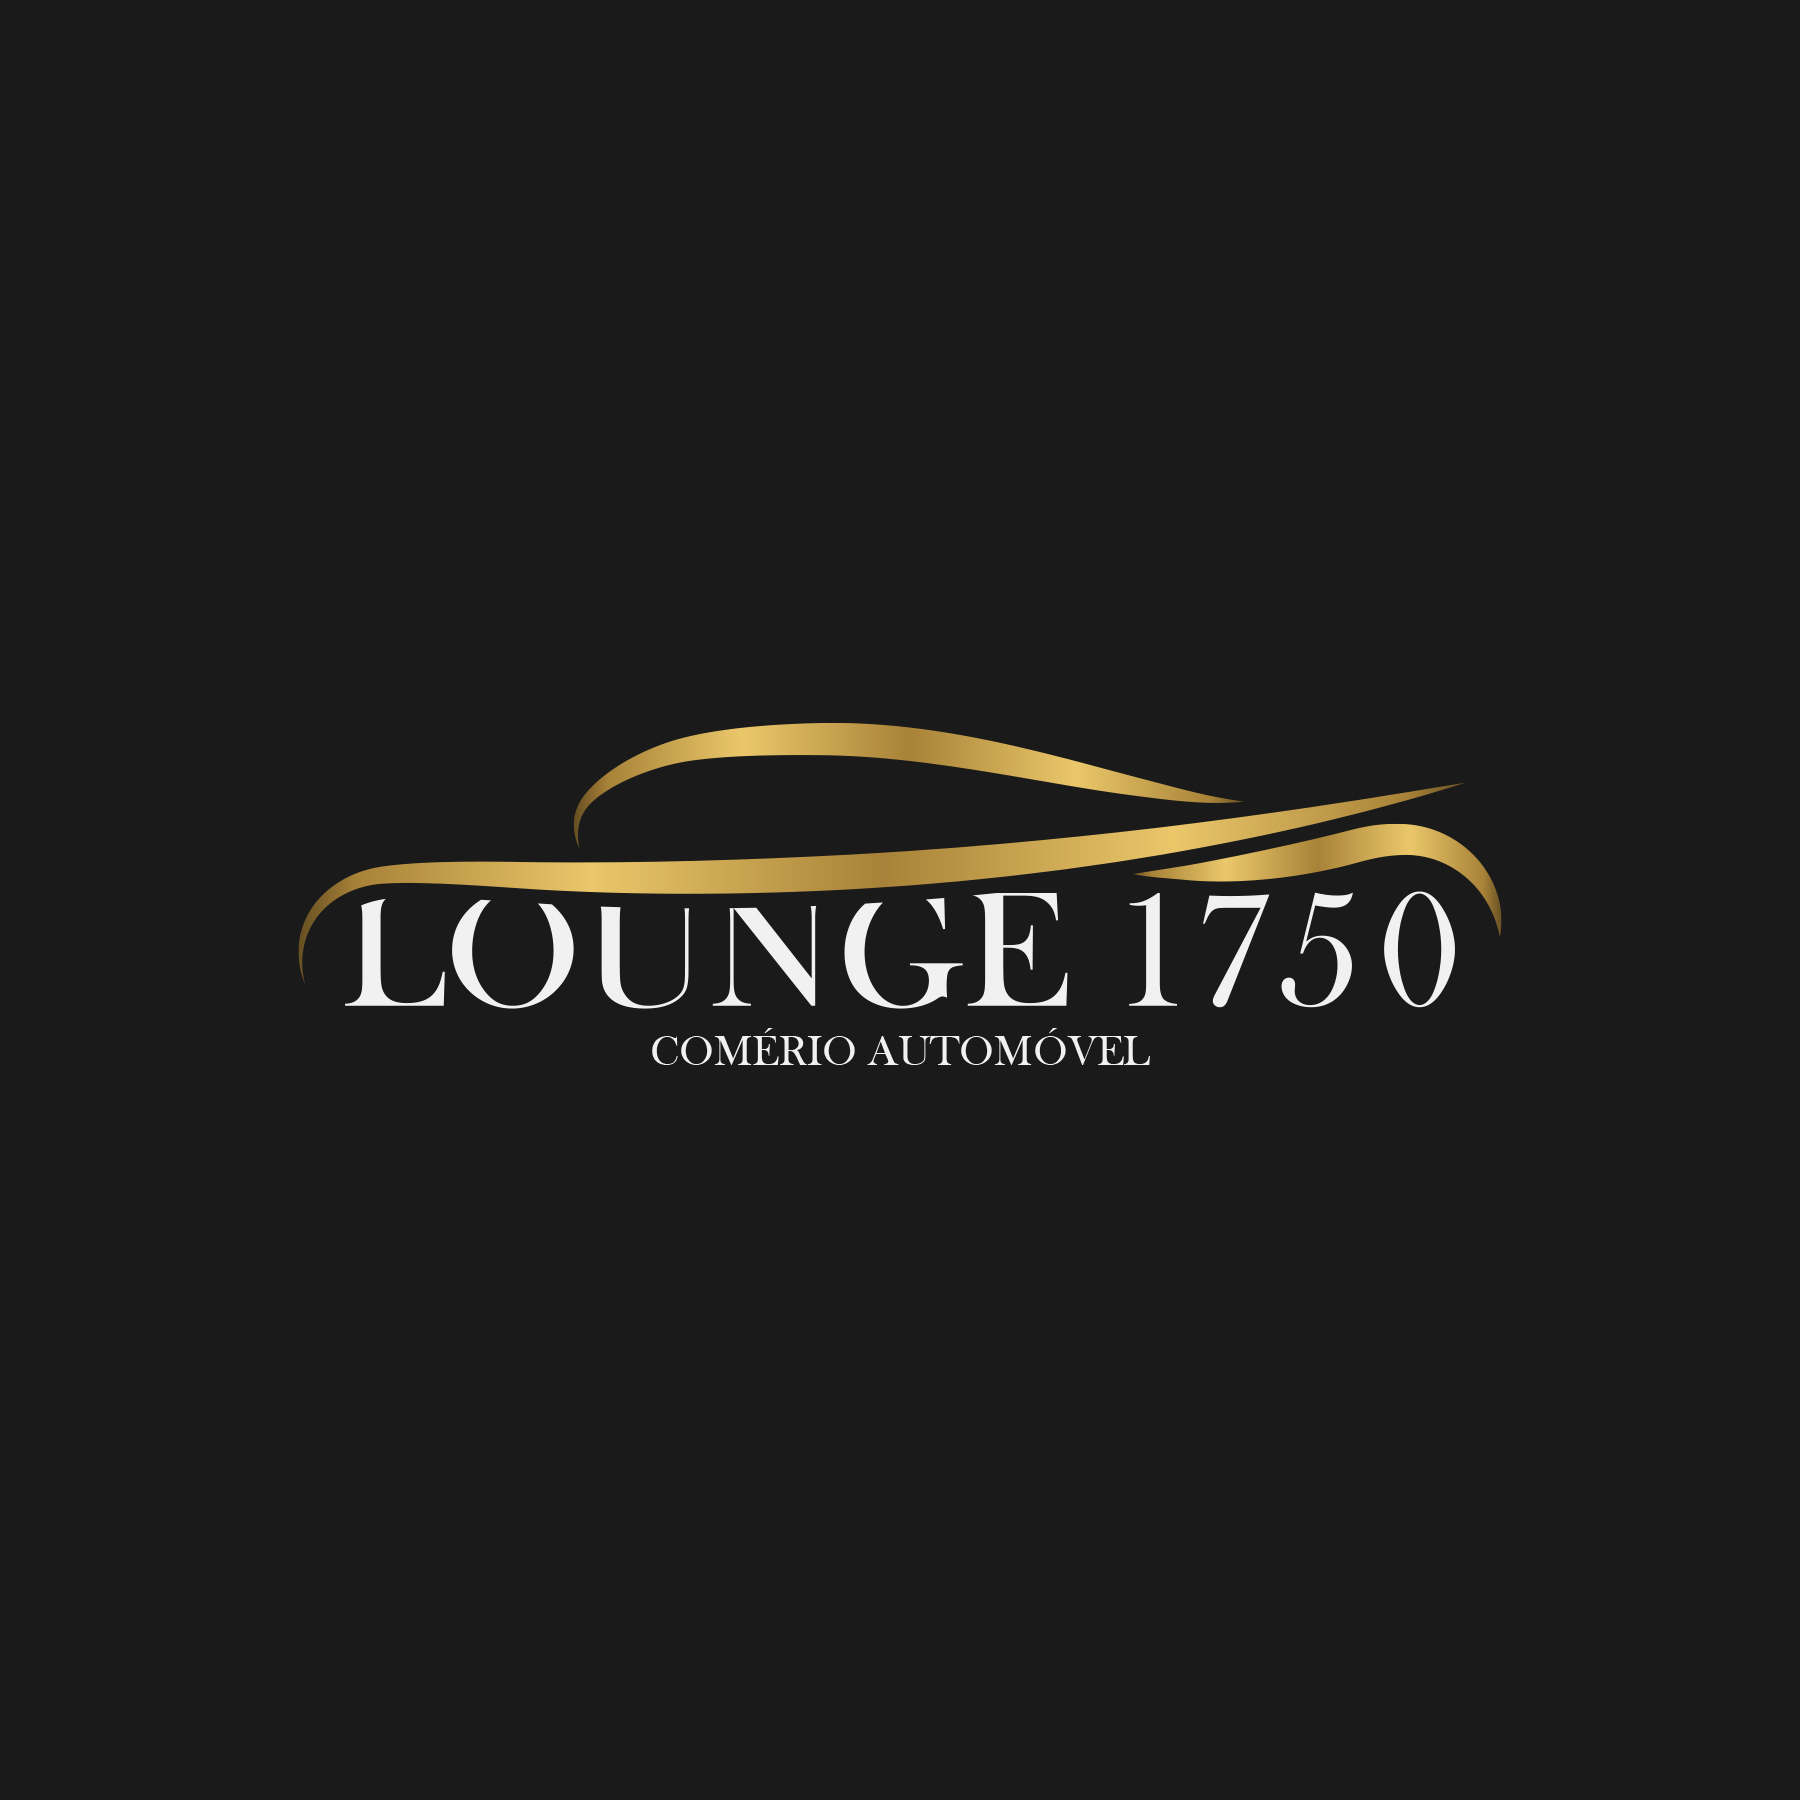 Lounge 1750